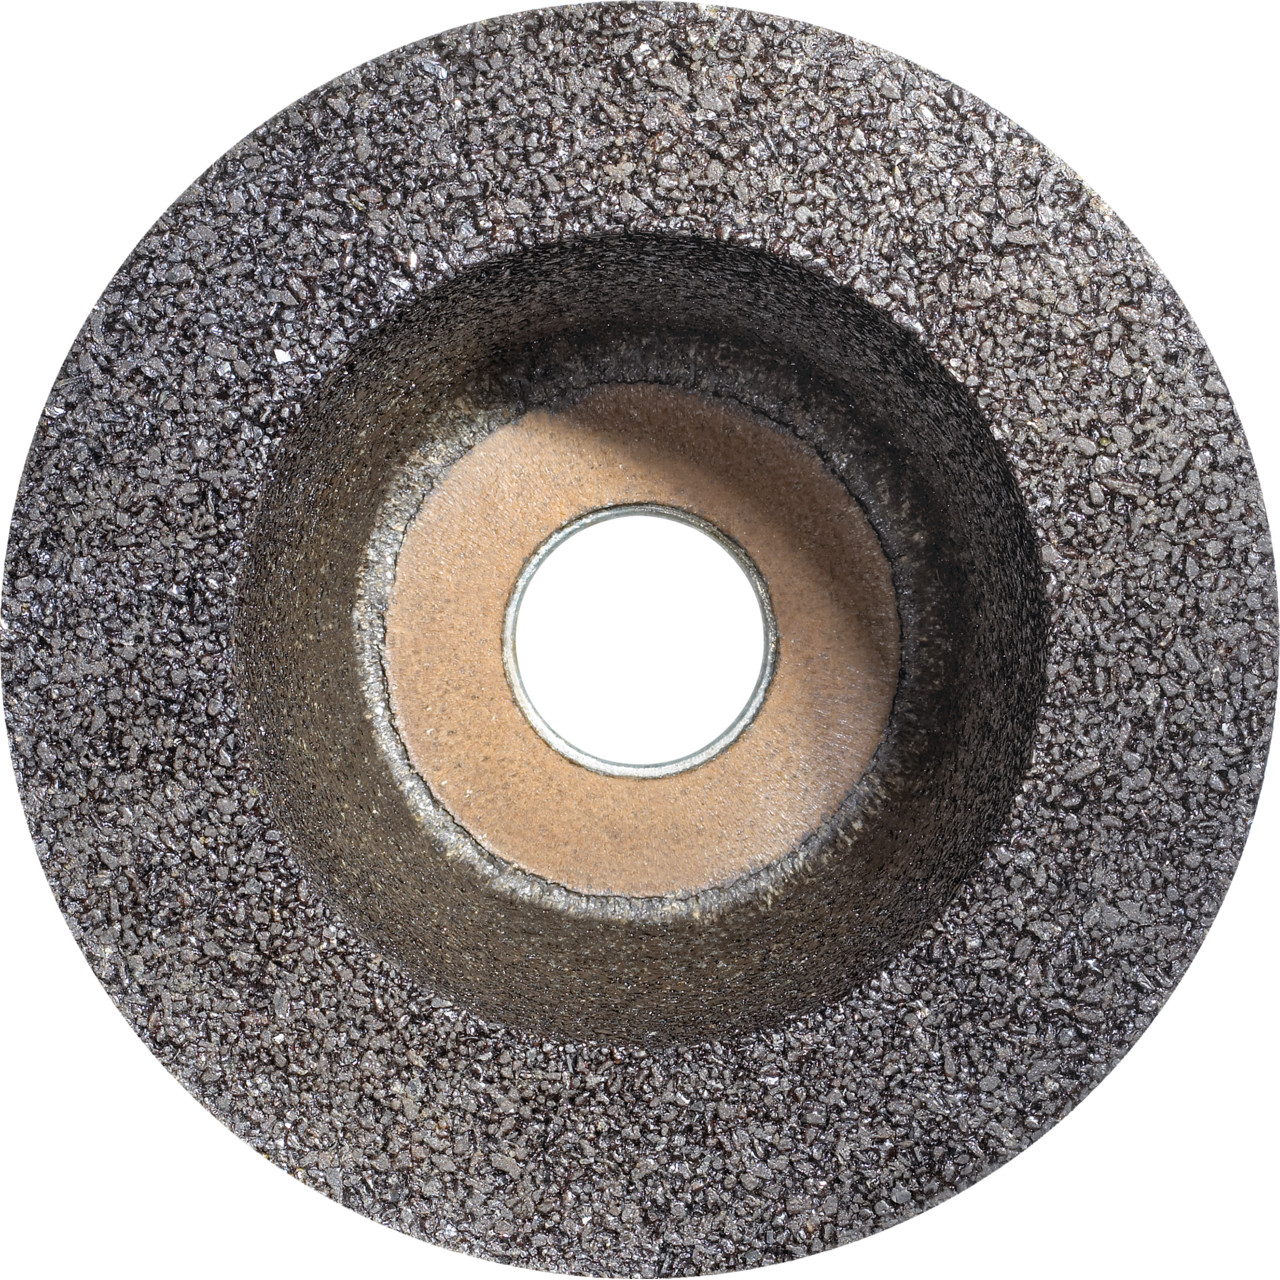 TYROLIT Tazza in resina sintetica DxTxGE 100x45xM14 Per pietra, forma: 6ZB (tazza di macinazione), Art. 553403